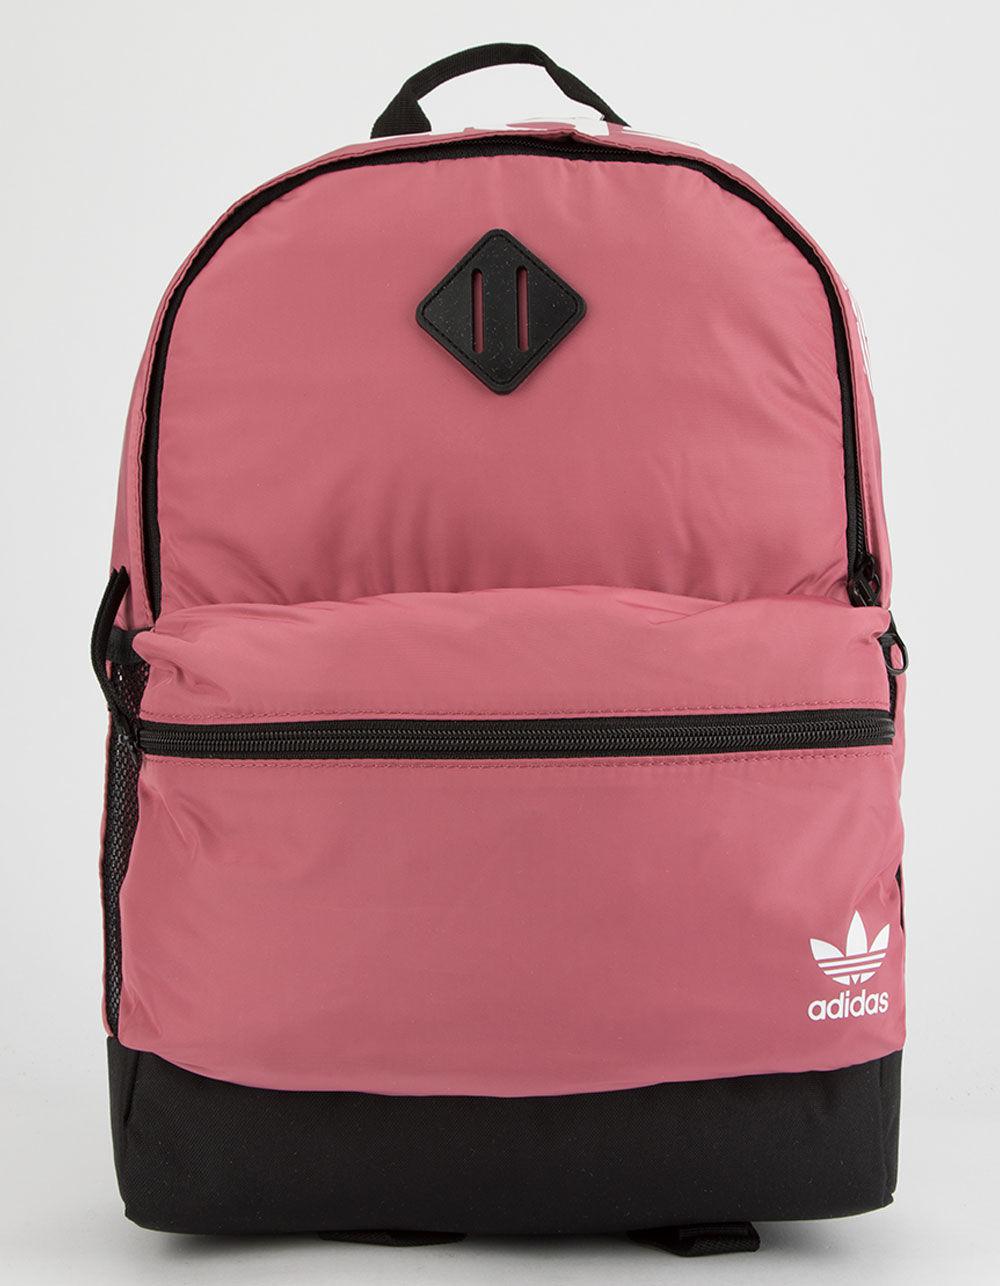 adidas originals national backpack pink